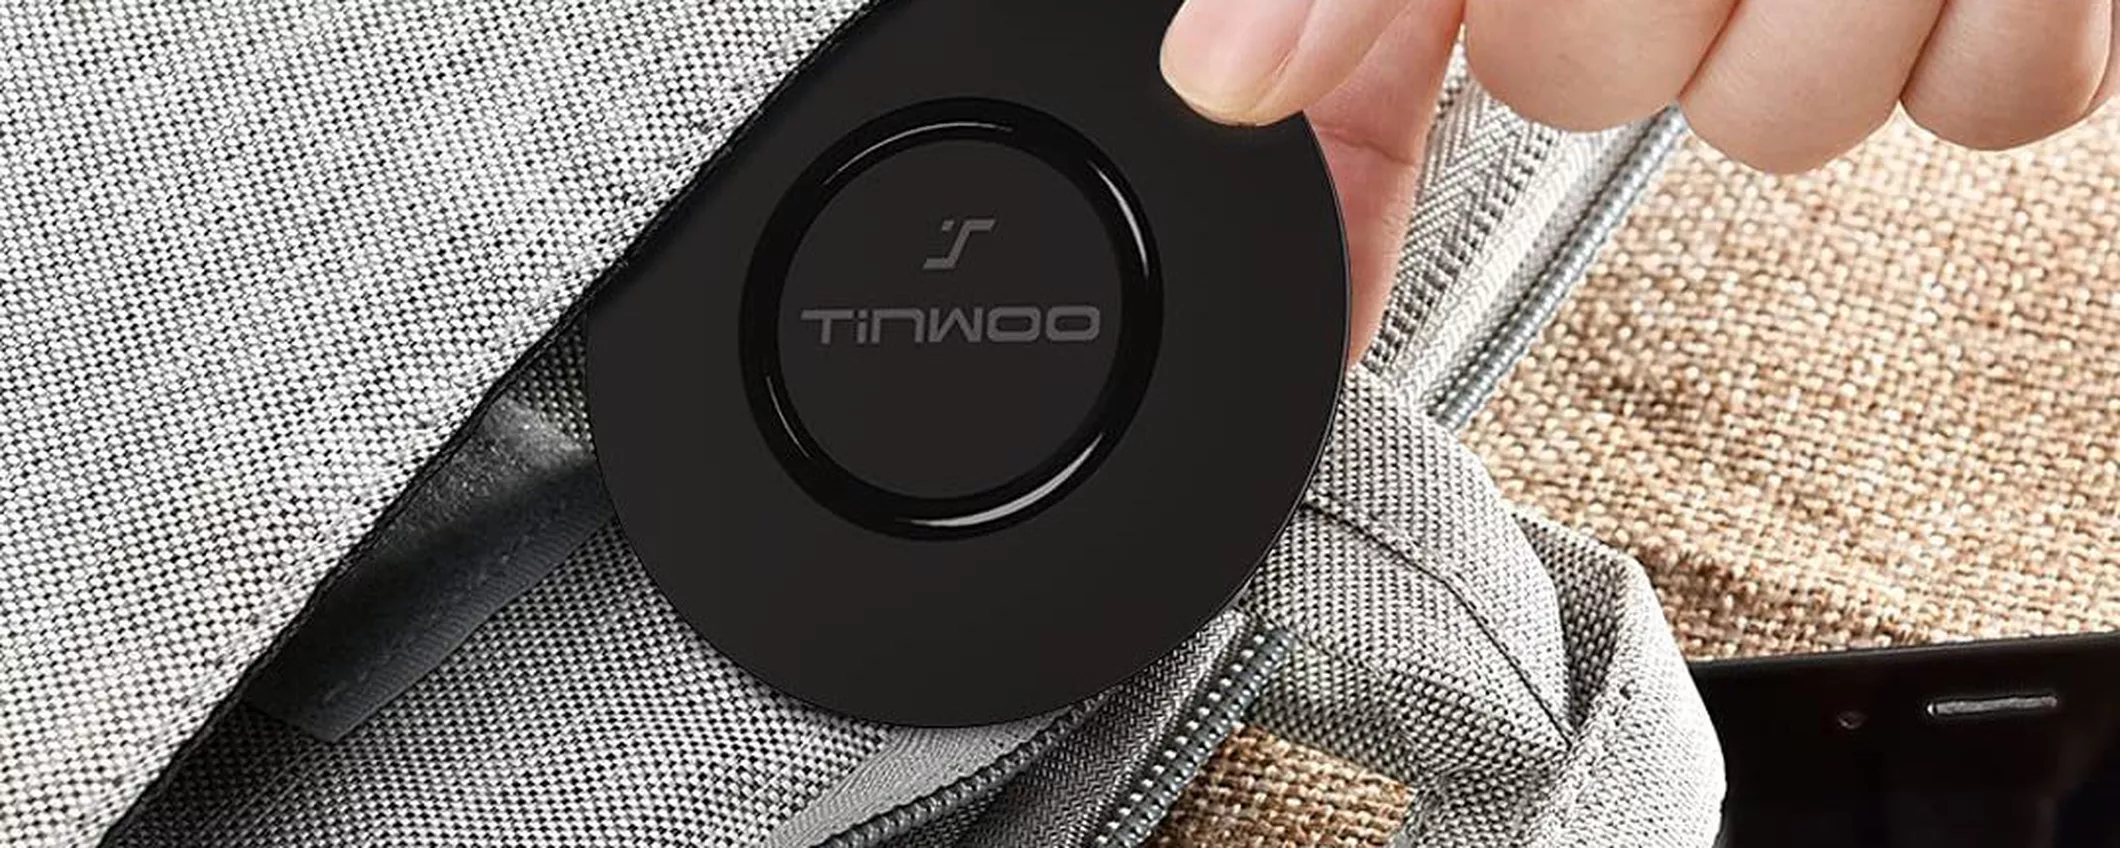 Caricatore wireless magnetico Tinwoo per iPhone a 10€: ERRORE DI PREZZO?